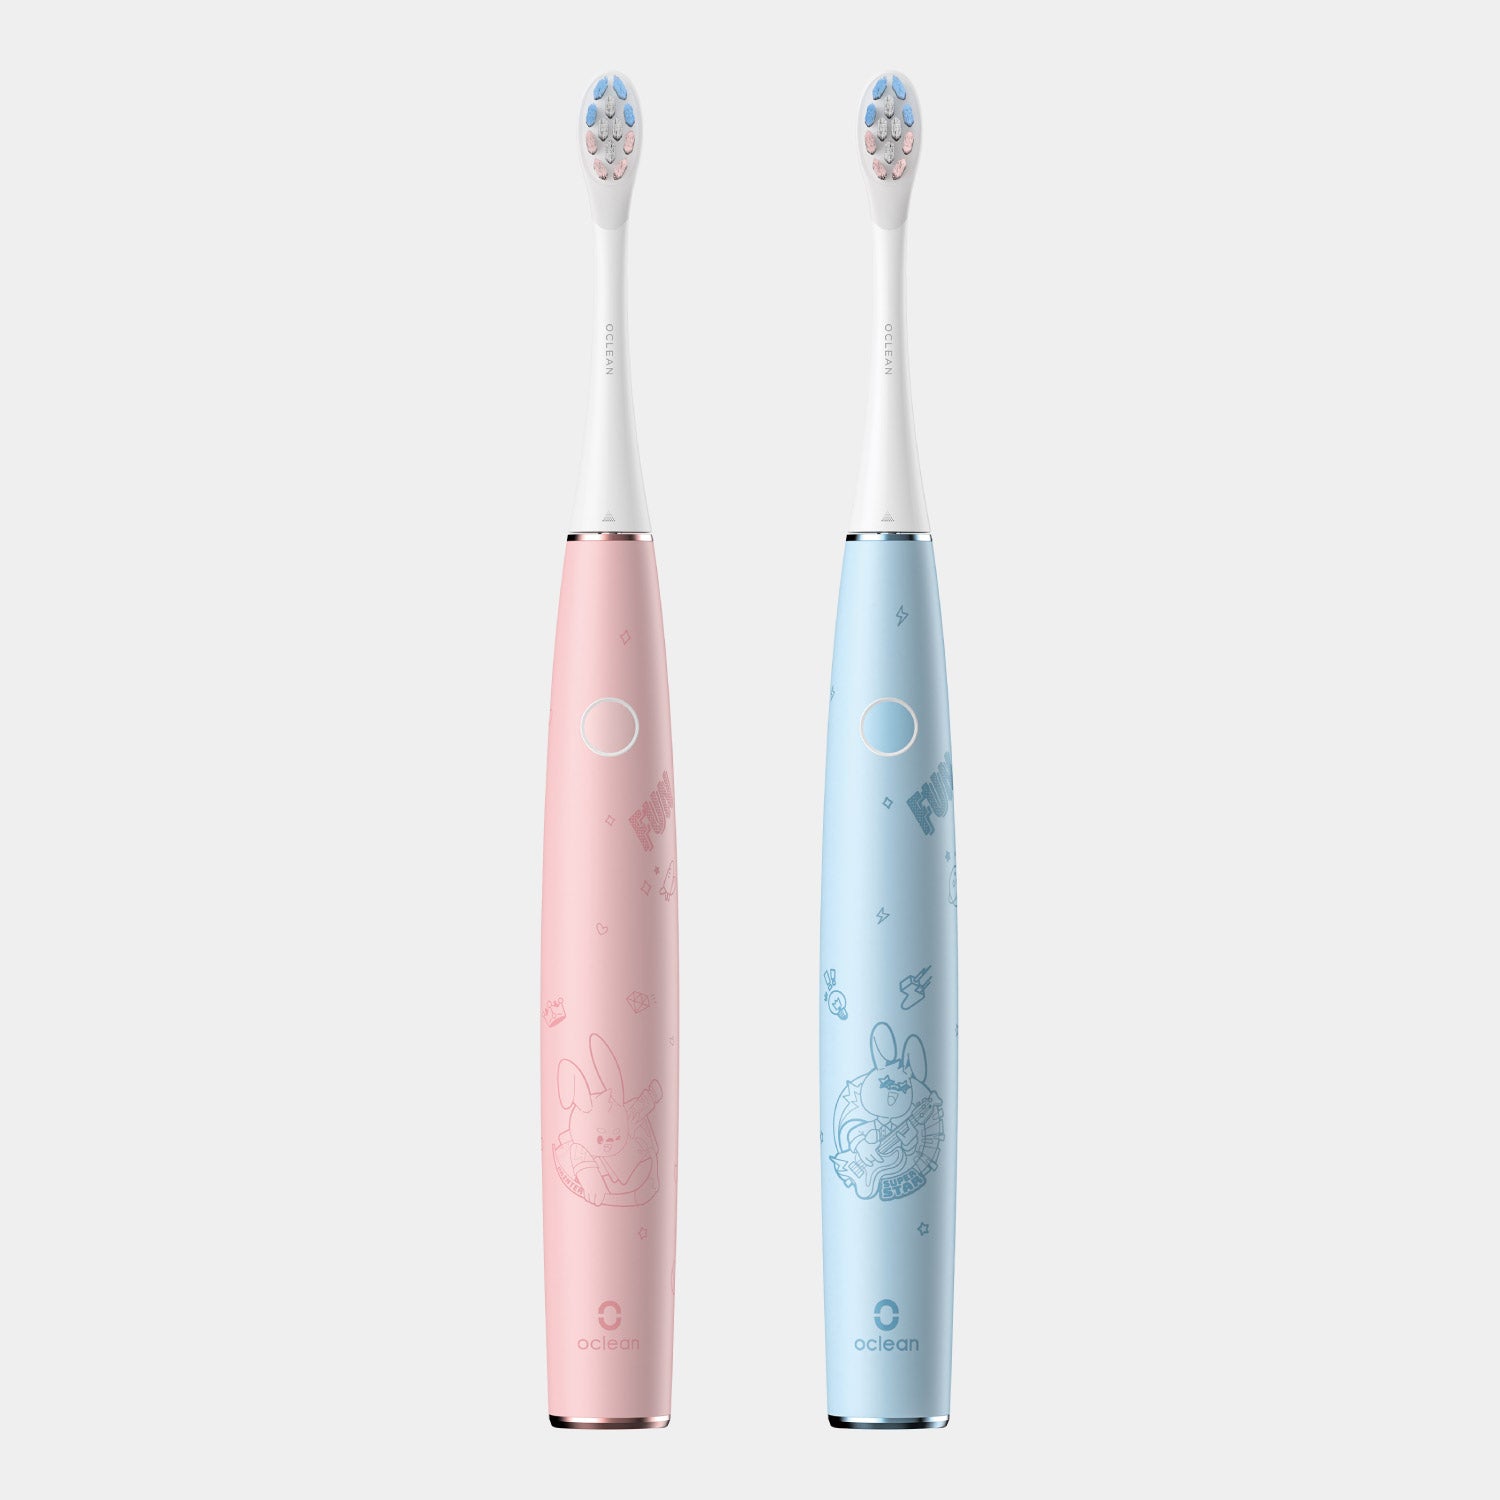 Oclean Kids Electric Toothbrush-Toothbrushes-Oclean Global Store